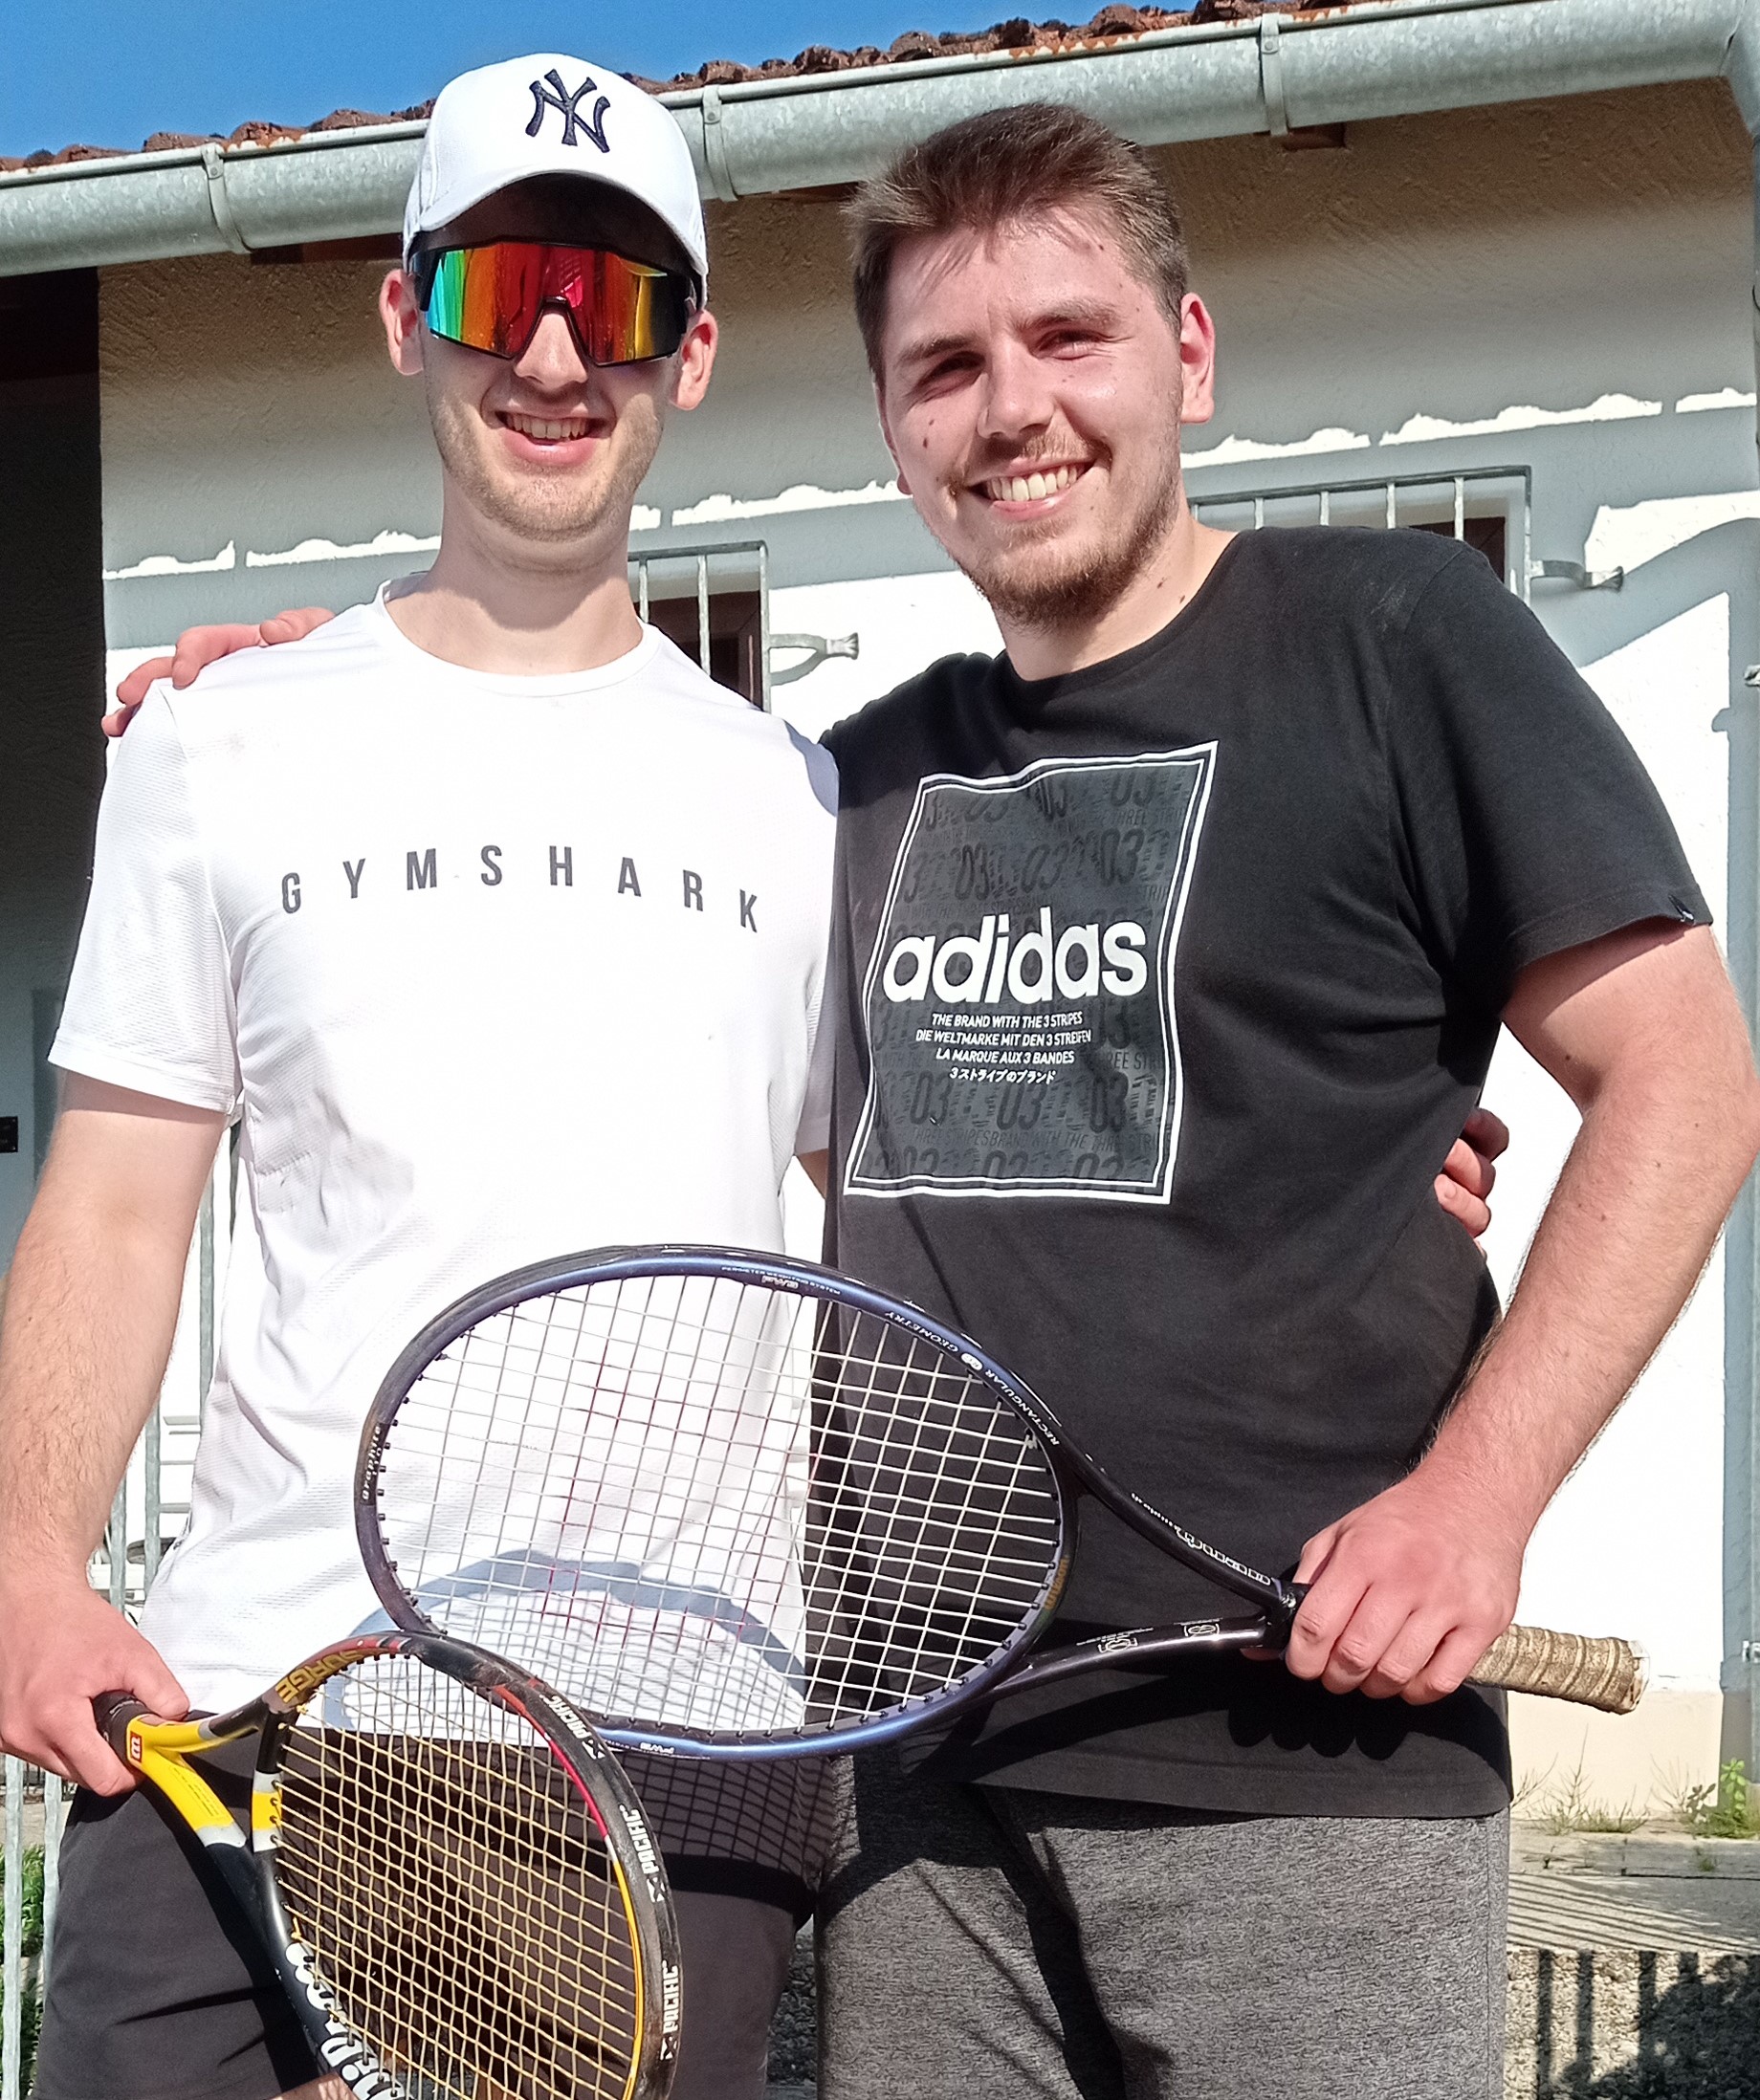 Tennis Andy u. Daniel